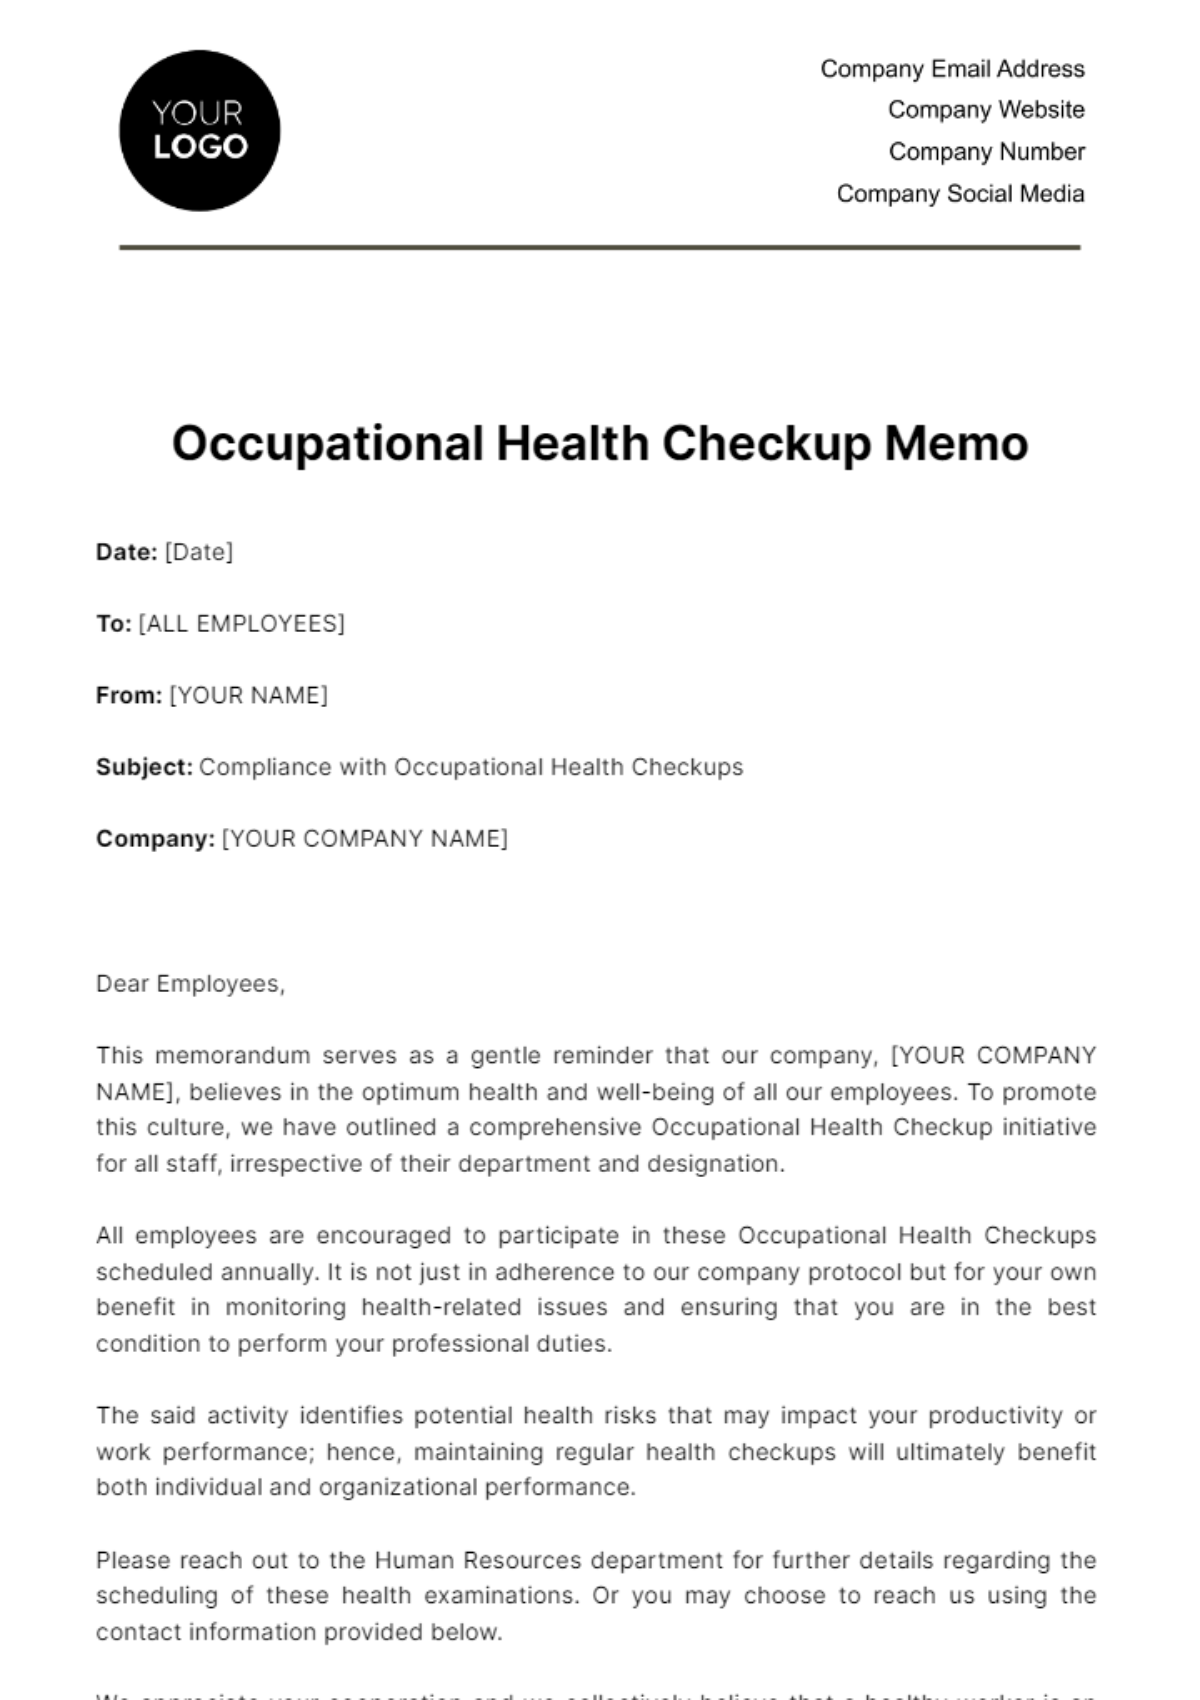 Occupational Health Checkup Memo HR Template